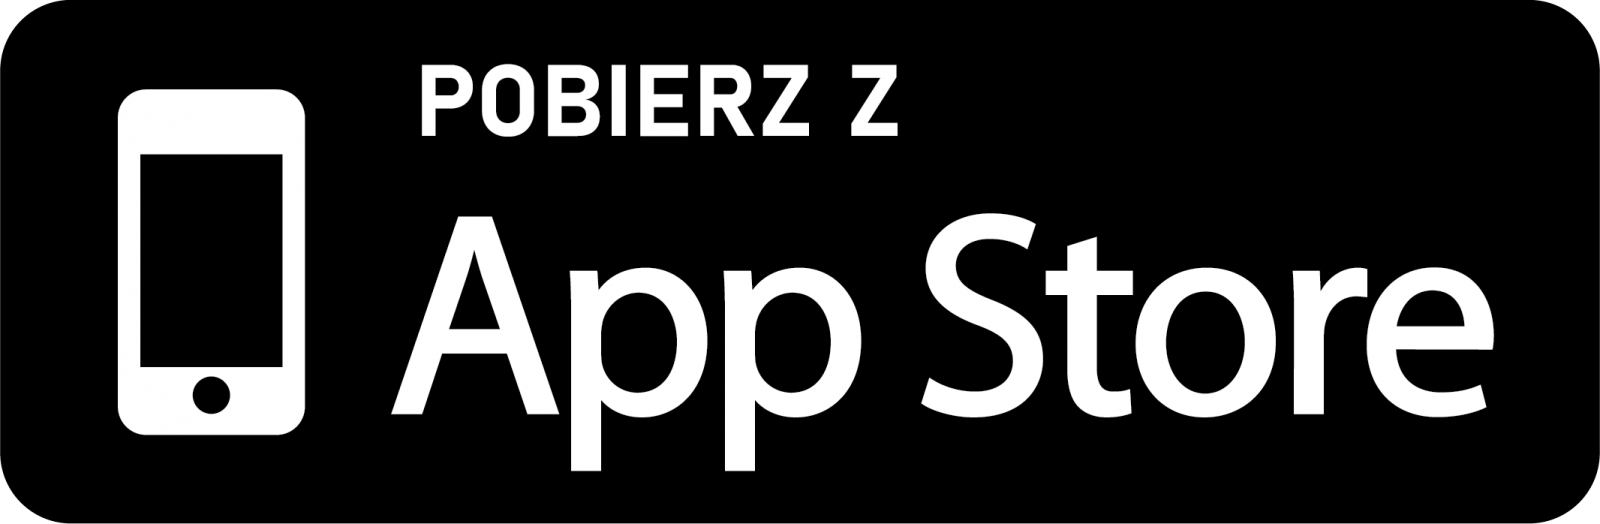 Przycisk App Store